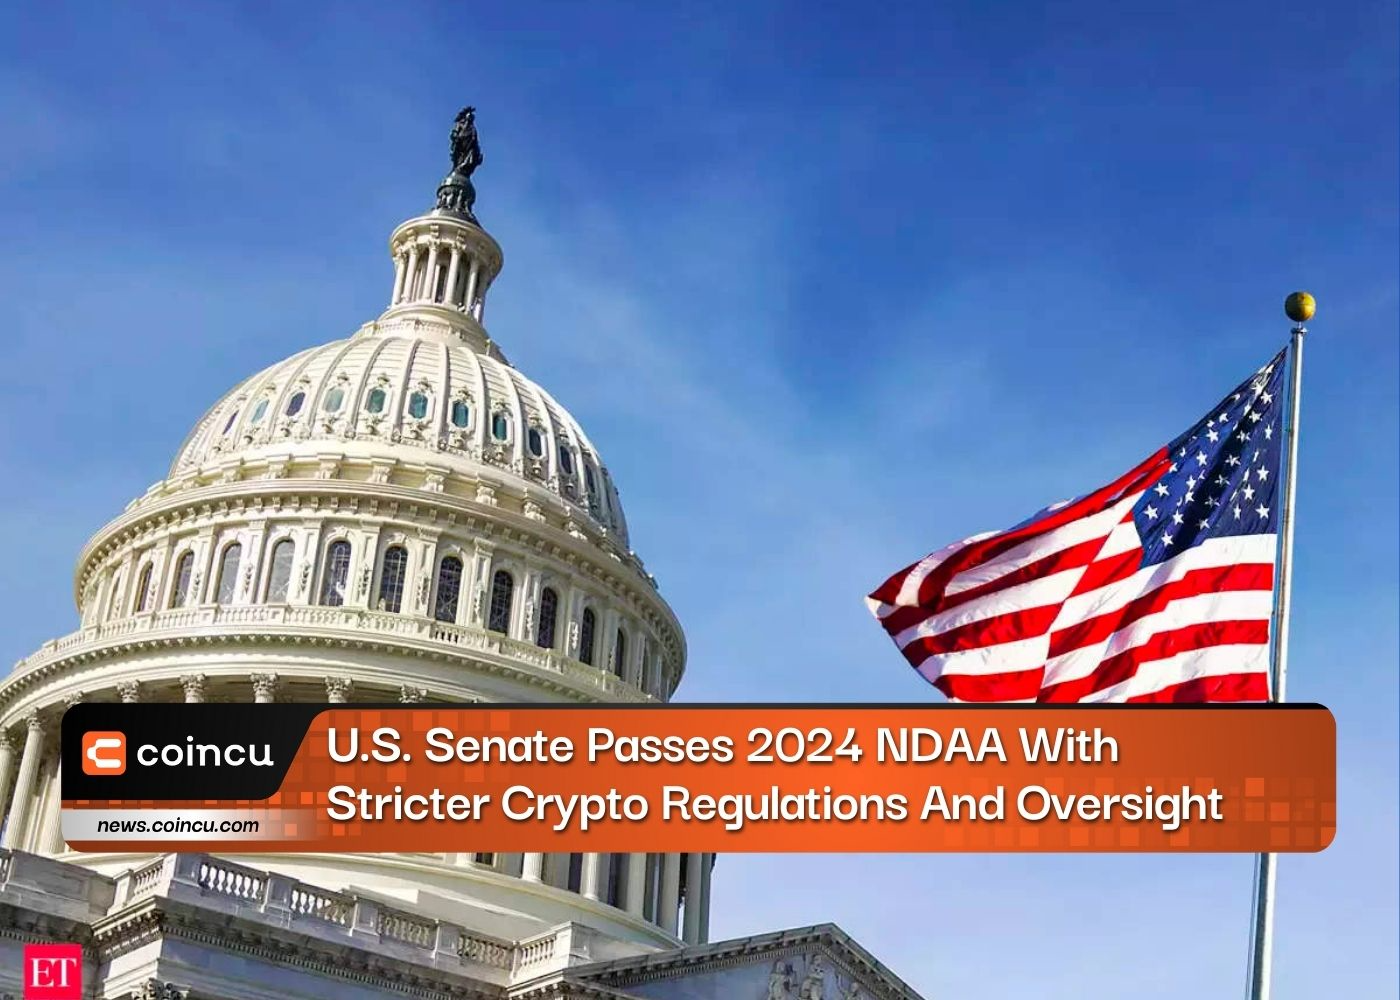 U.S. Senate Passes 2024 NDAA With Stricter Crypto Regulations And